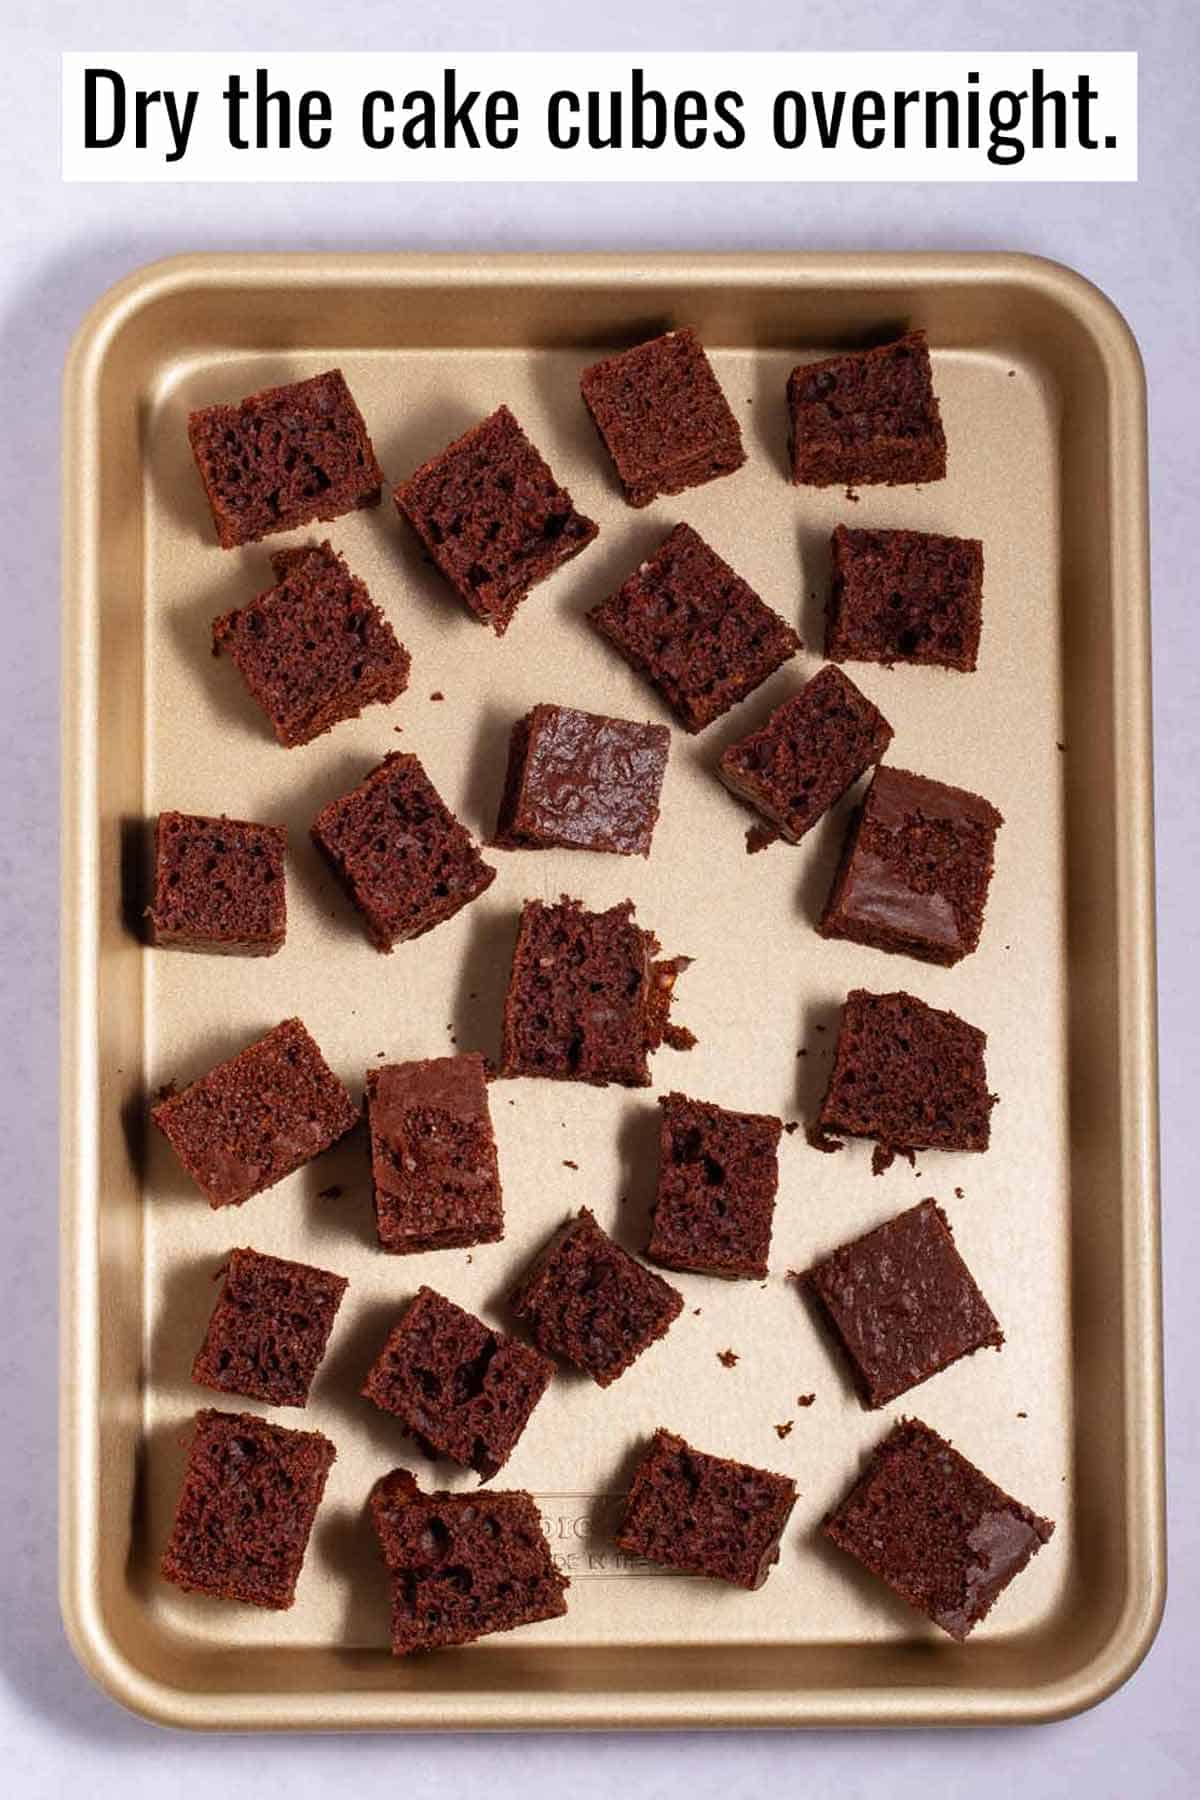 Chocolate cake cubes drying on an baking sheet.